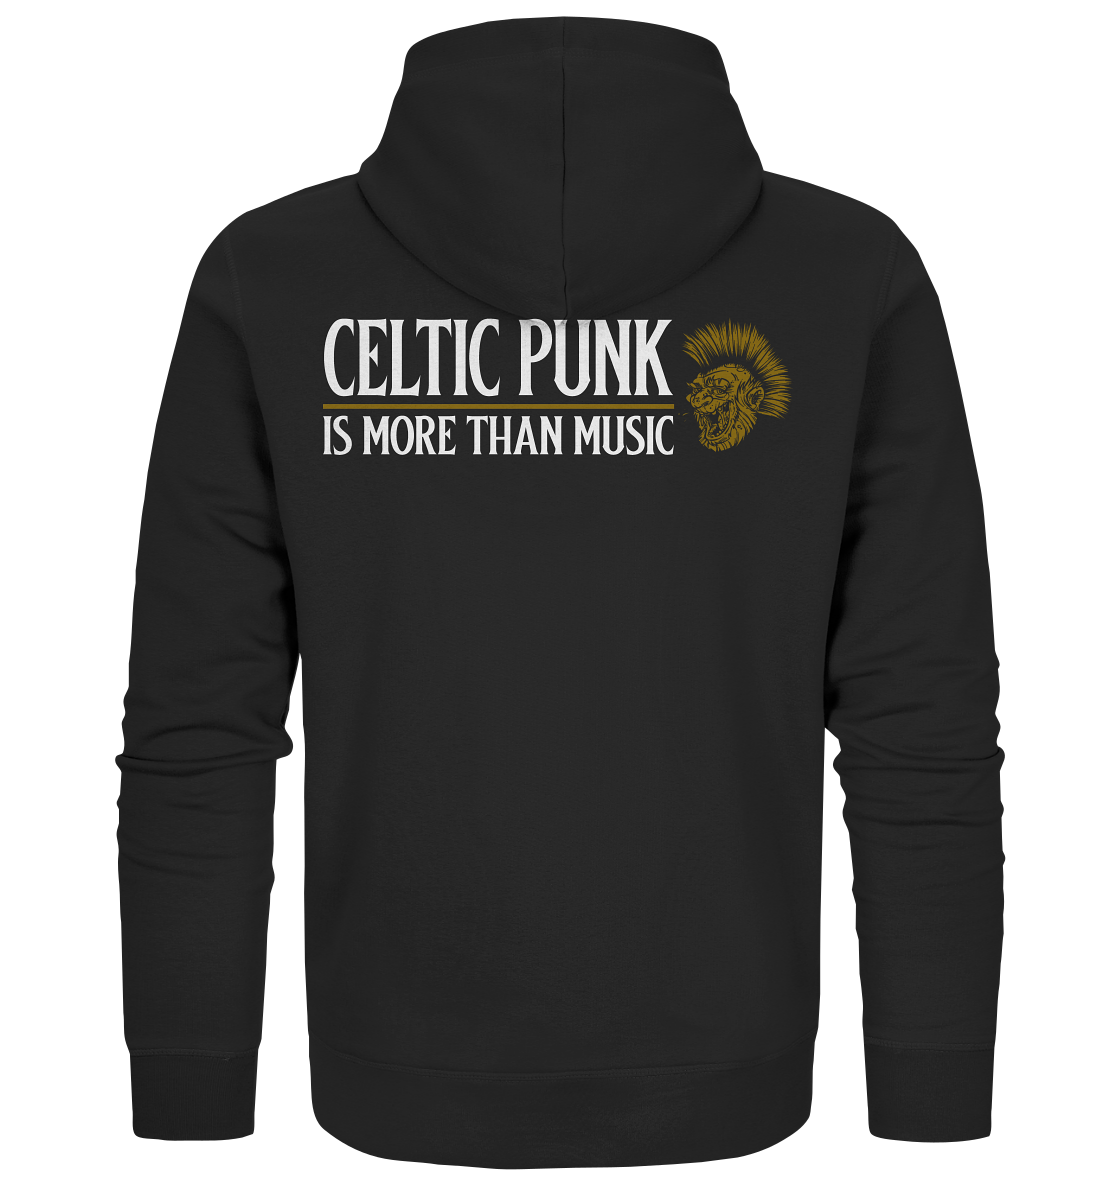 Celtic Punk "Is More Than Music" - Organic Zipper